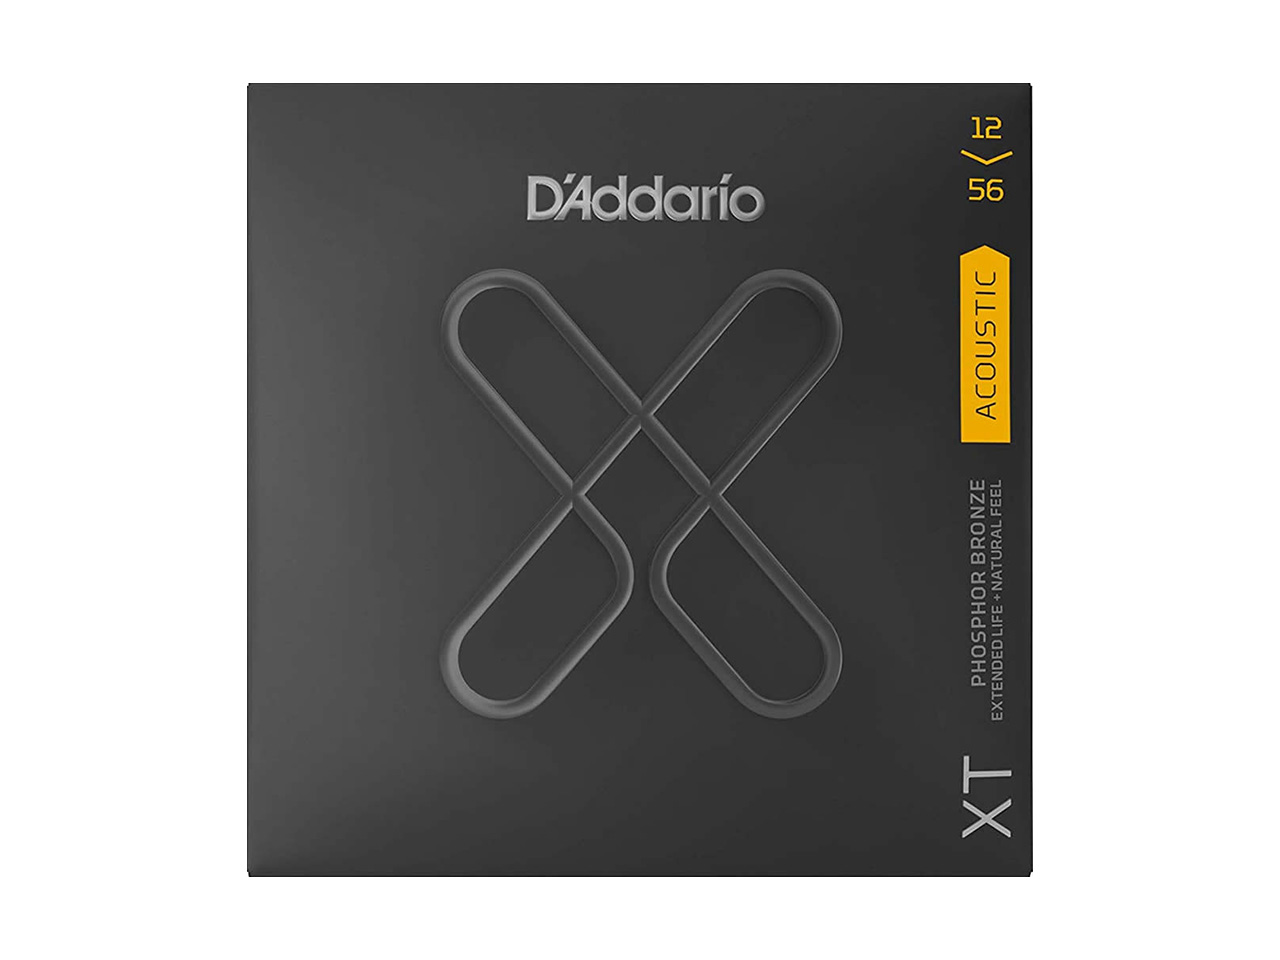 D'Addario(ダダリオ) XT ACOUSTIC PHOSPHOR BRONZE, EXTRA LIGHT / XTAPB1256 (アコースティックギター弦)